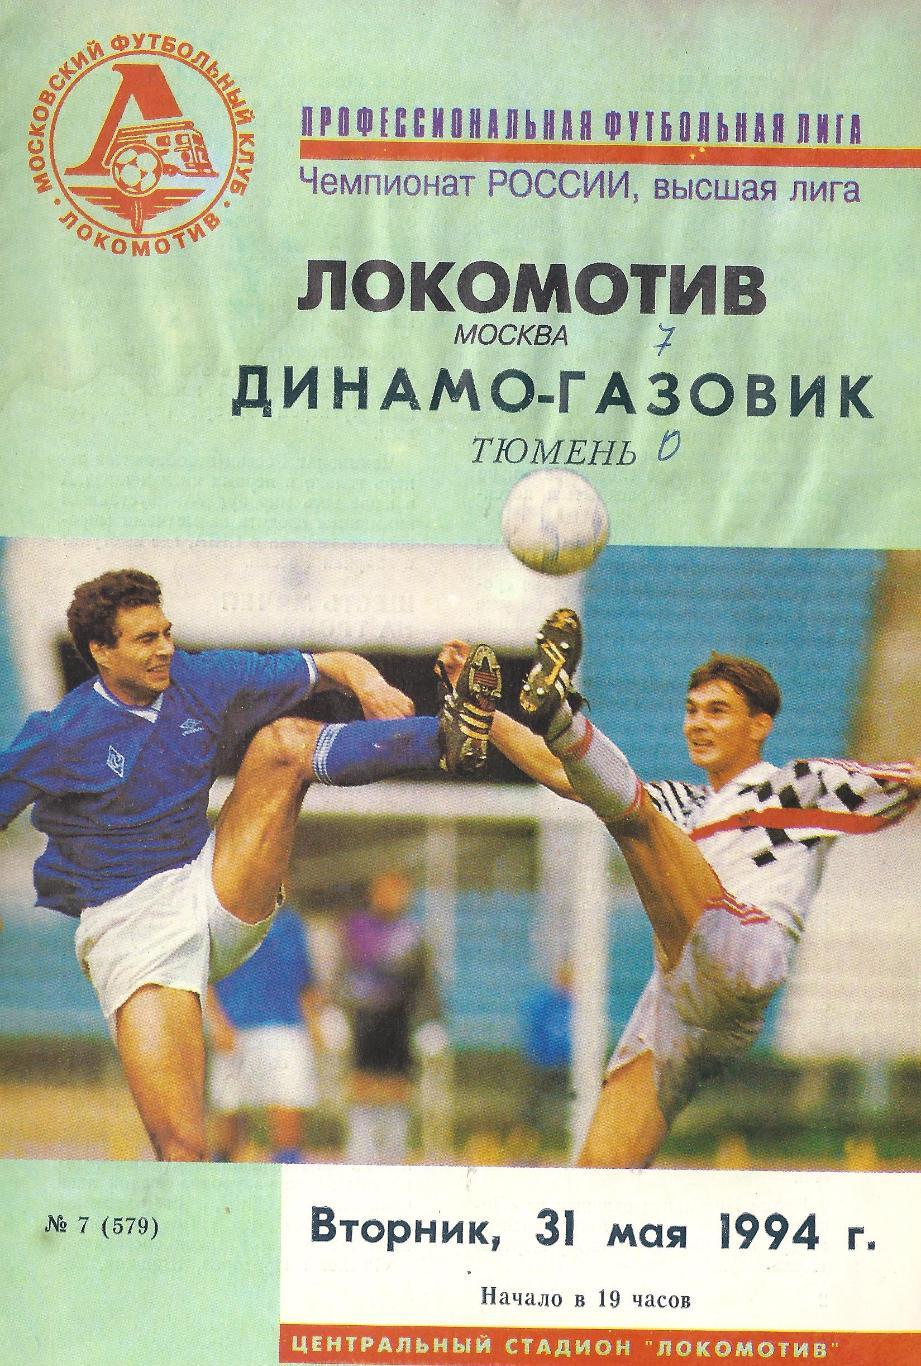 1994 - Локомотив Москва - Динамо-Газовик Тюмень